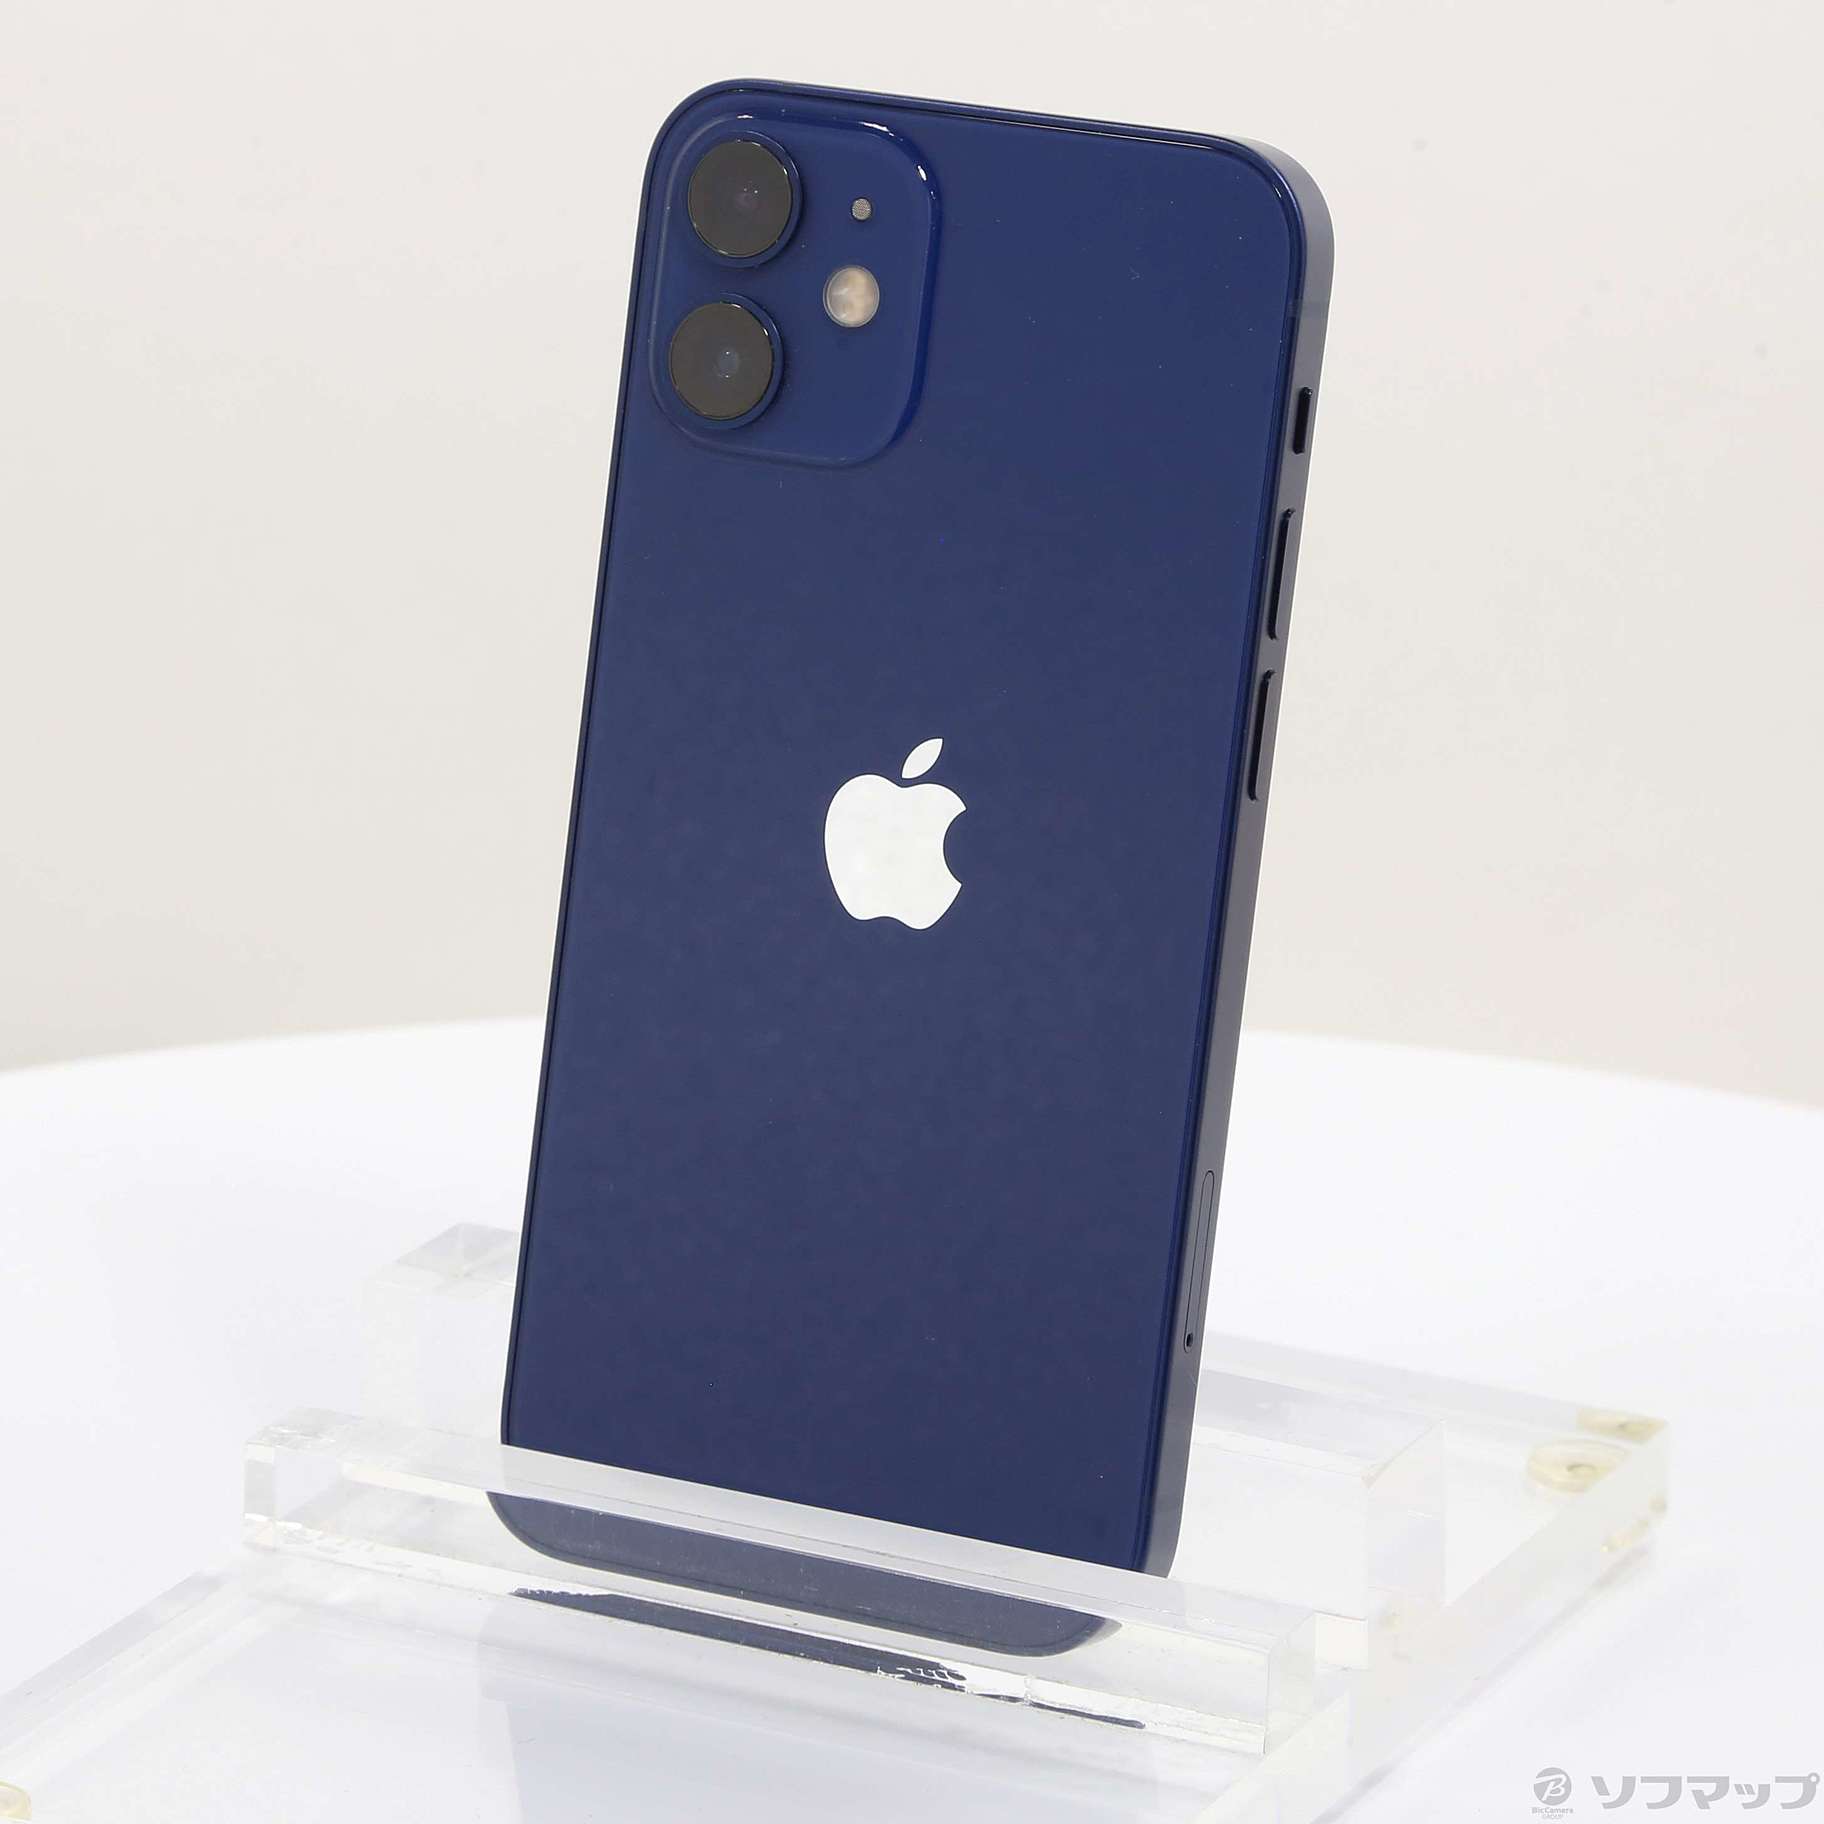 iPhone 12 mini 64GB SIMフリー [ブルー] 中古(白ロム)価格比較 - 価格.com